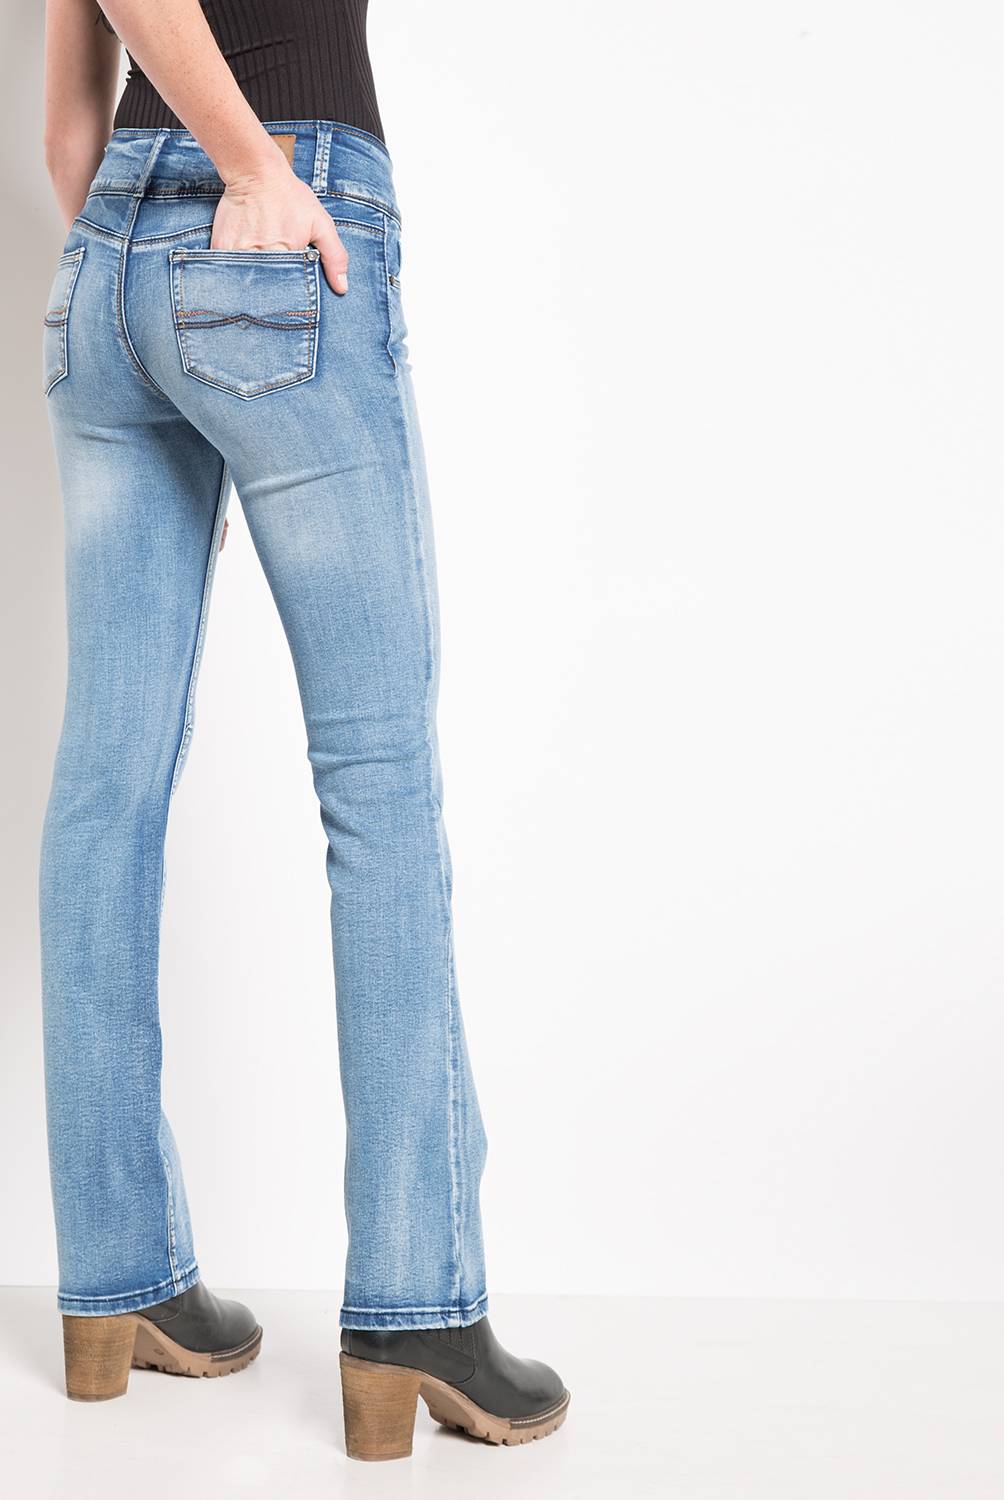 EFESIS - Jeans Mujer Slouchy Tiro Medio Algodón Efesis